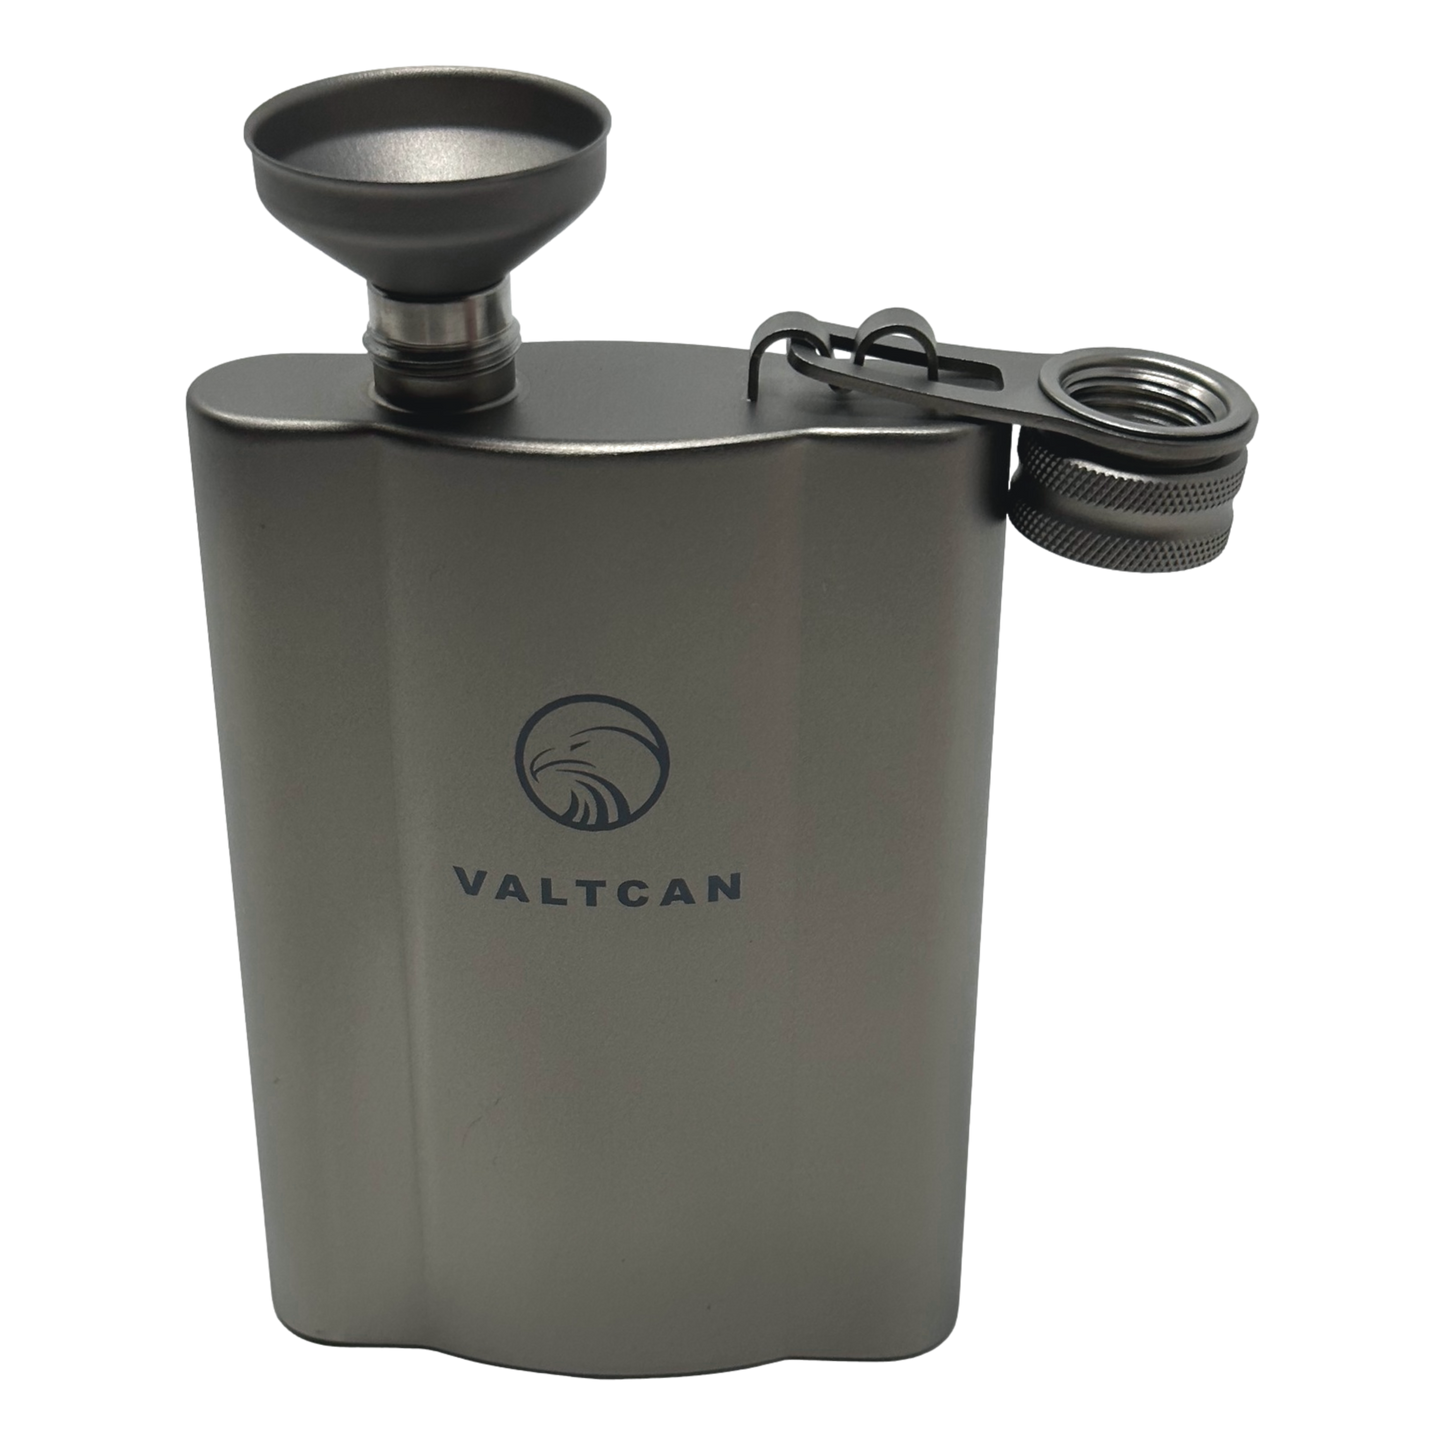 Valtcan Titanium Flask "Double Up" Ti Funnel 180ml 6 oz Capacity 144g